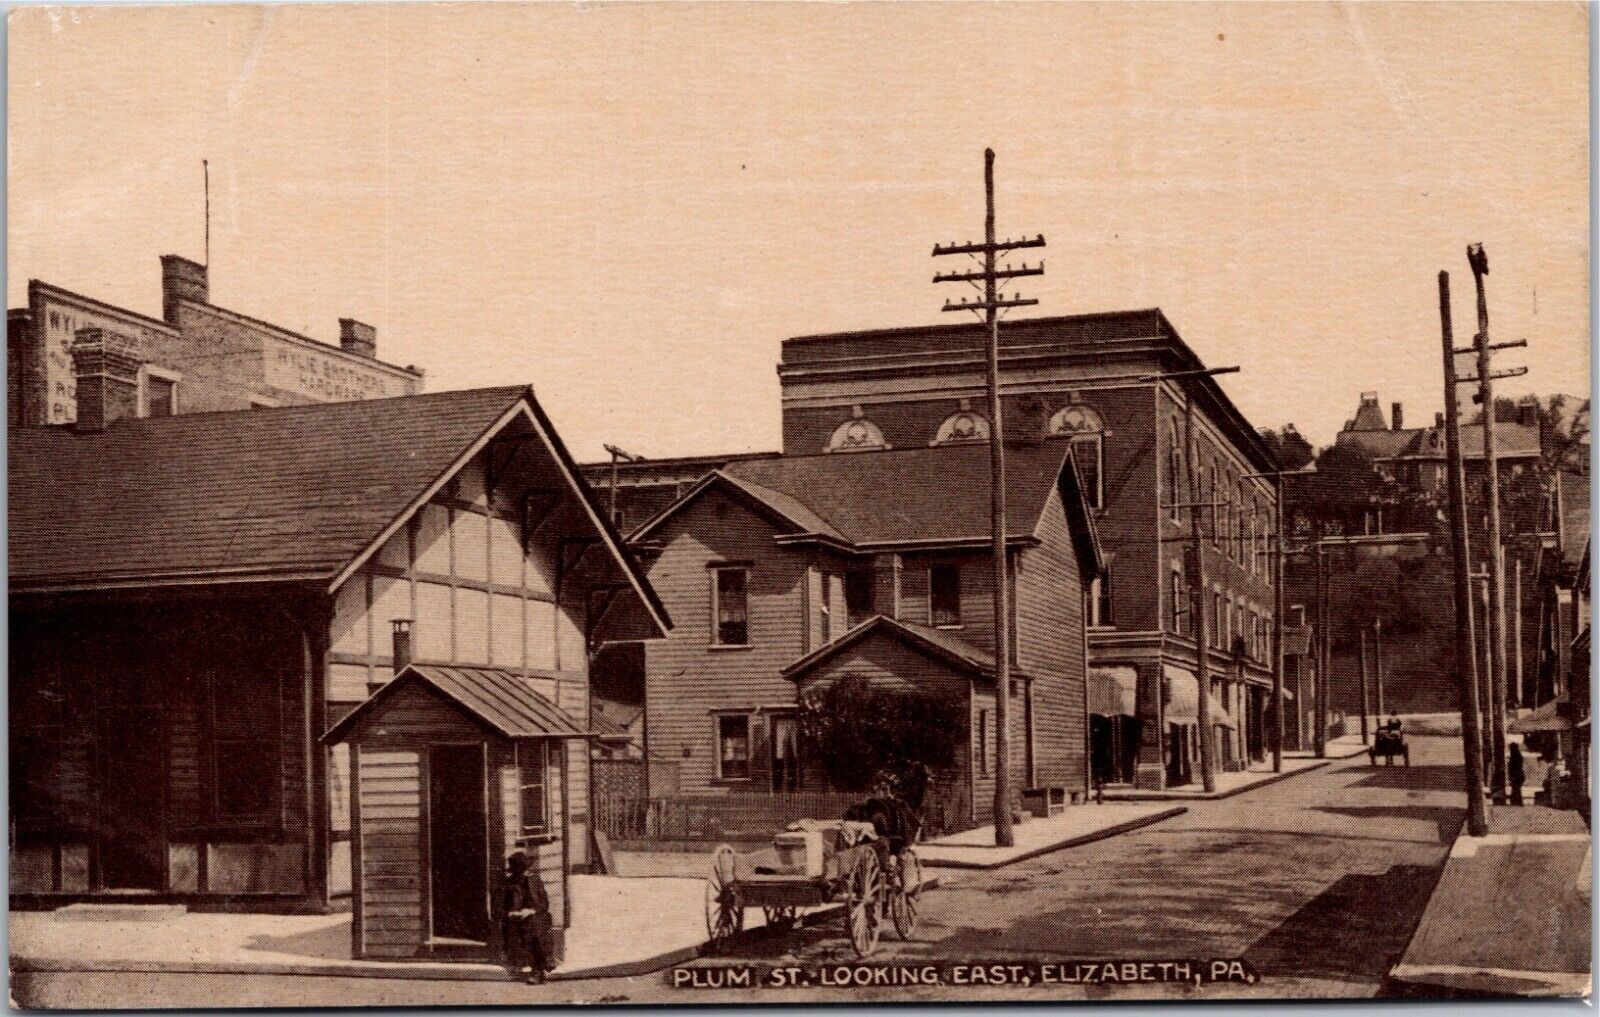 Elizabeth PA Plum St Looking East - Horse & Wagon - NICE c.1910 Vintage Postcard